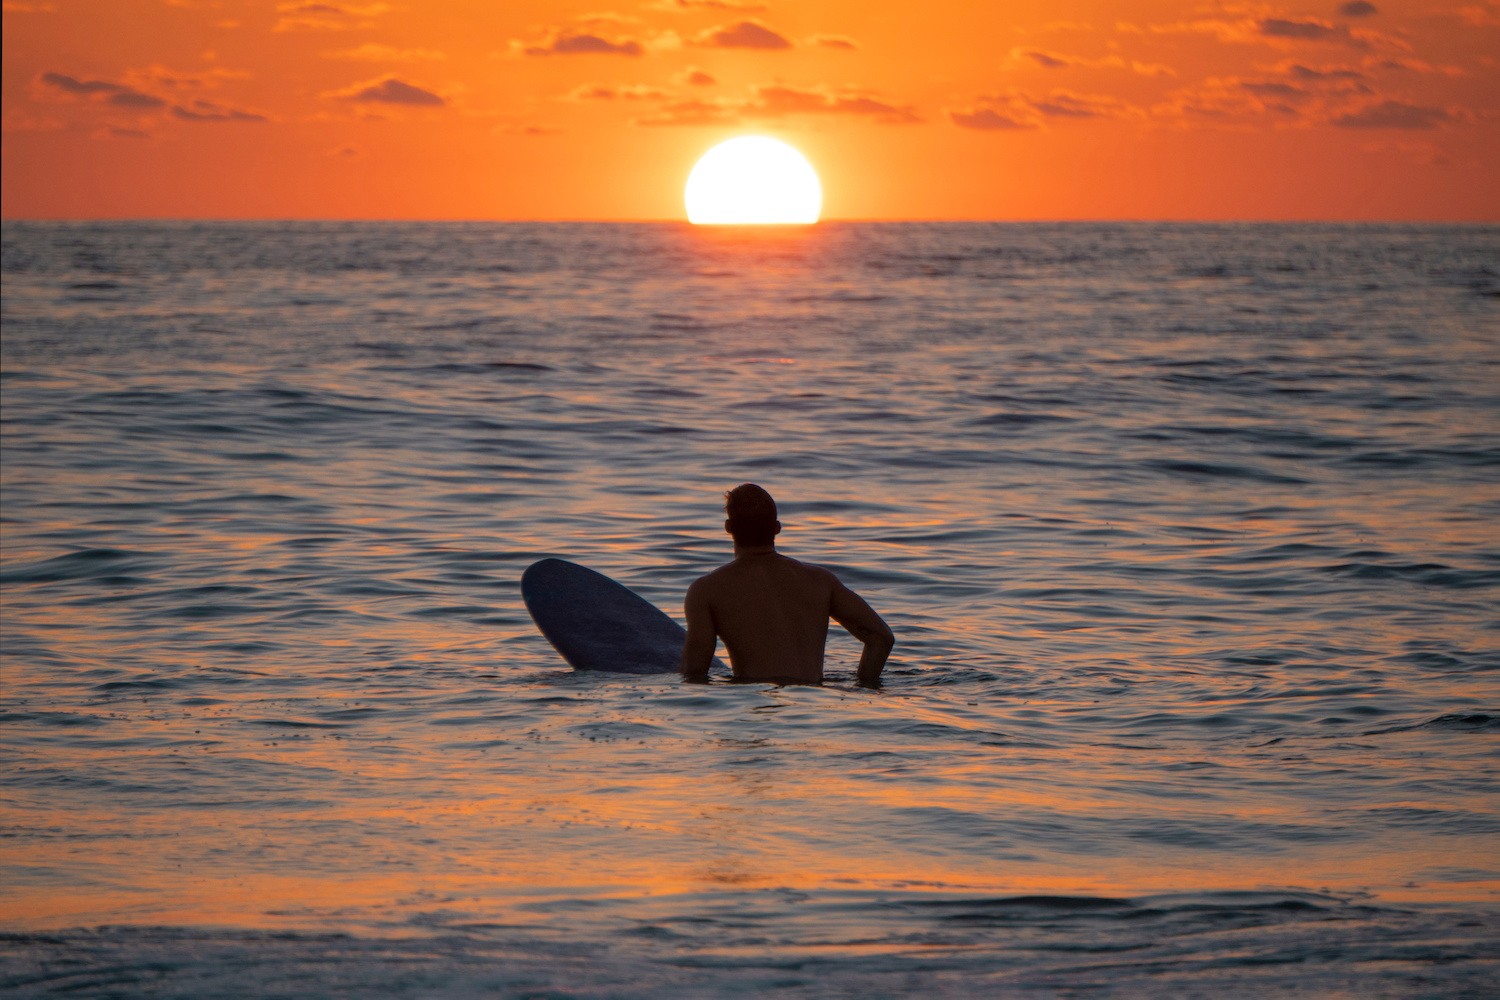 Longboard surfer in Baja California at sunset or sunrise 